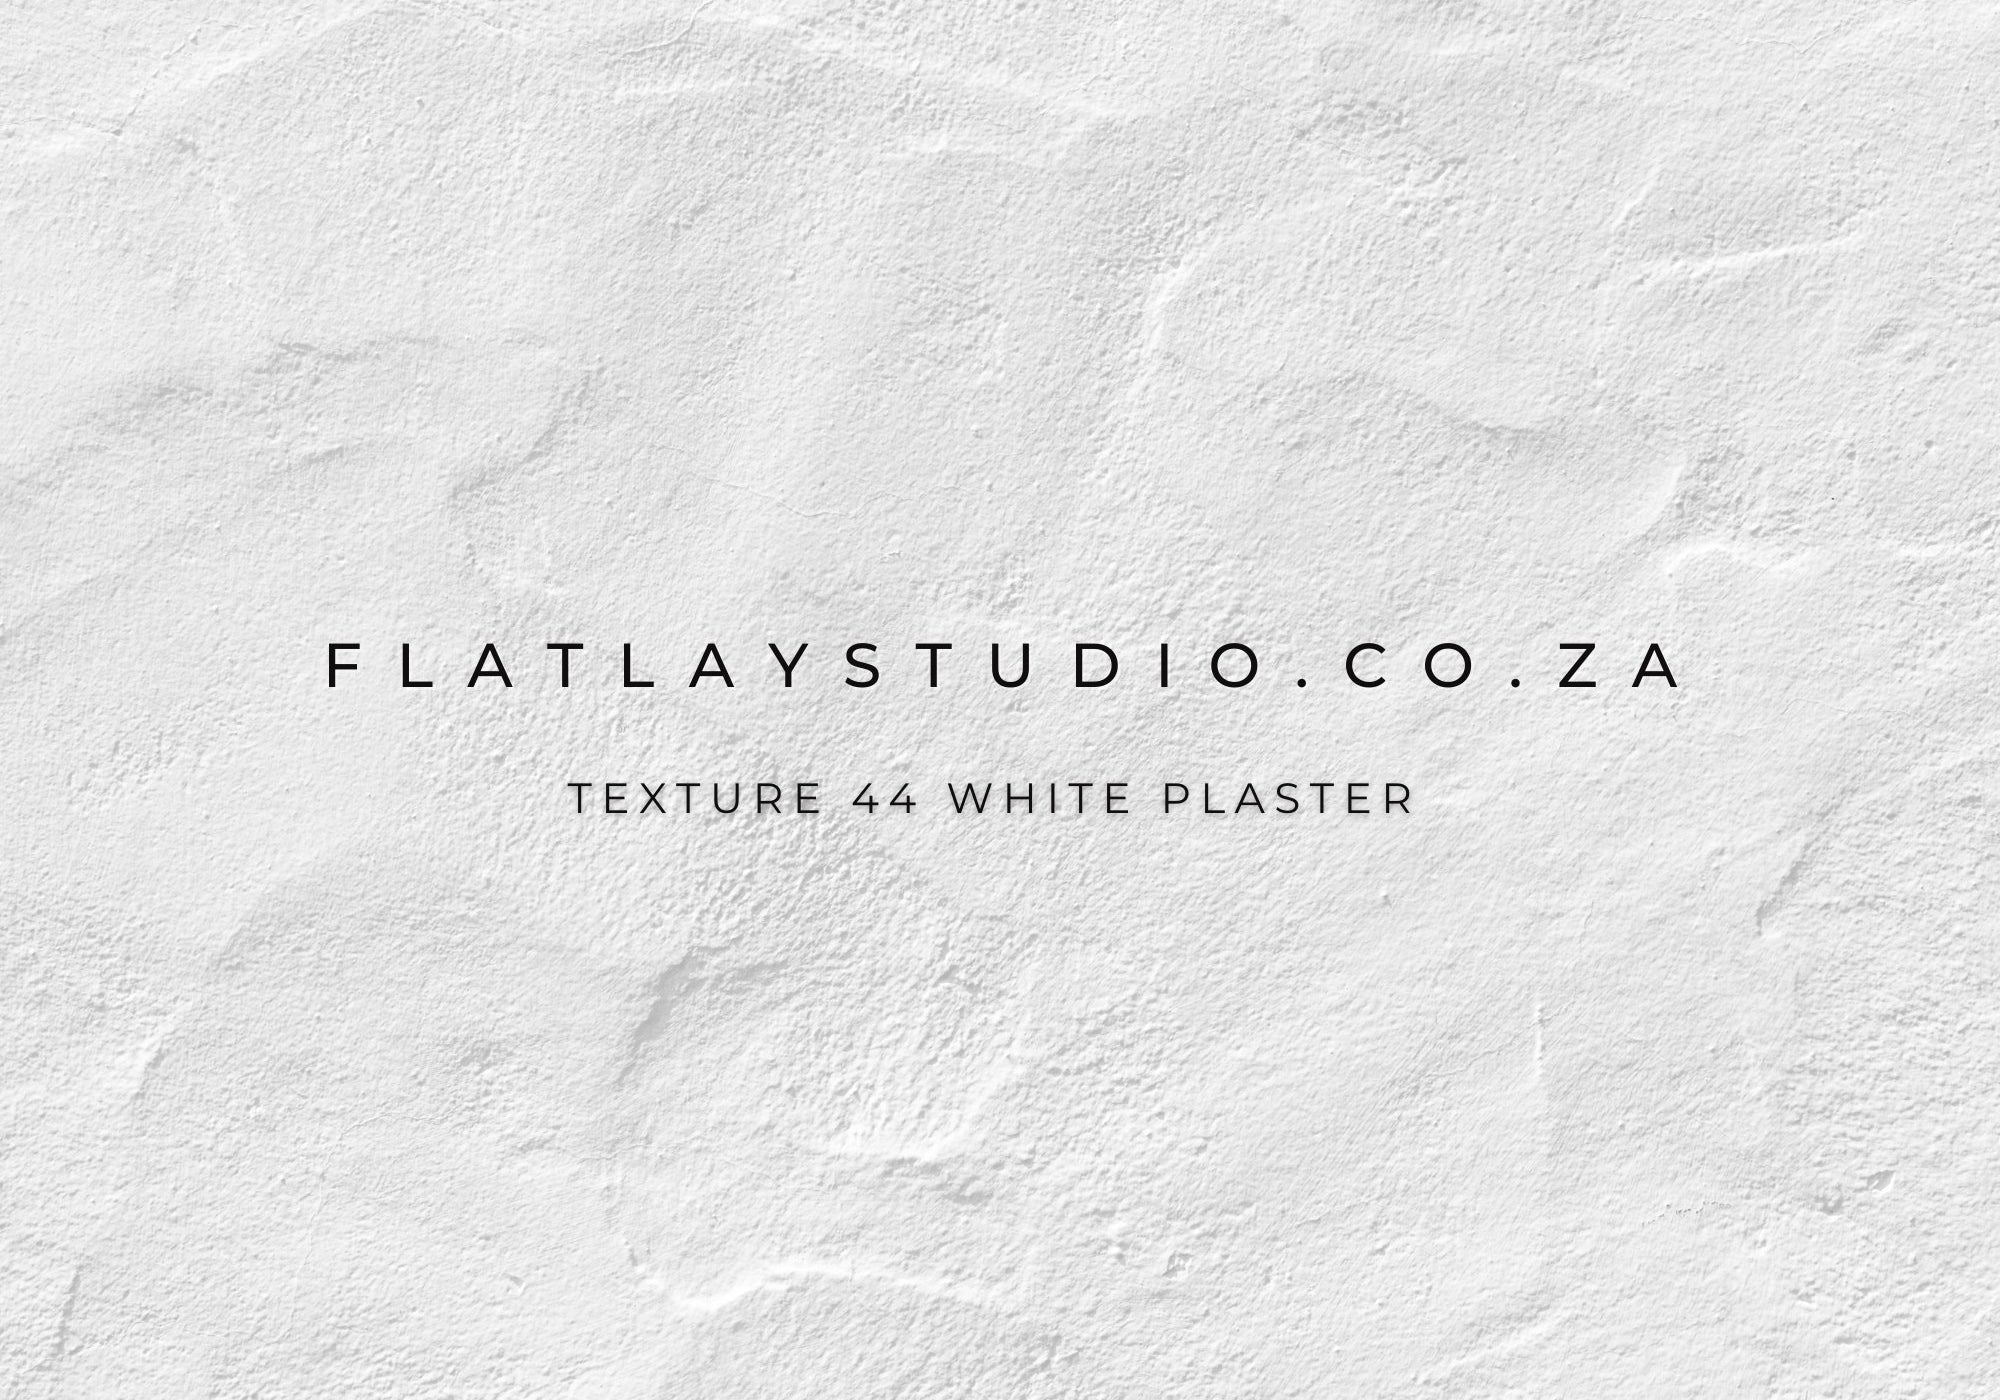 Texture 44 White Plaster - FlatlayStudio Flatlay Styling Board